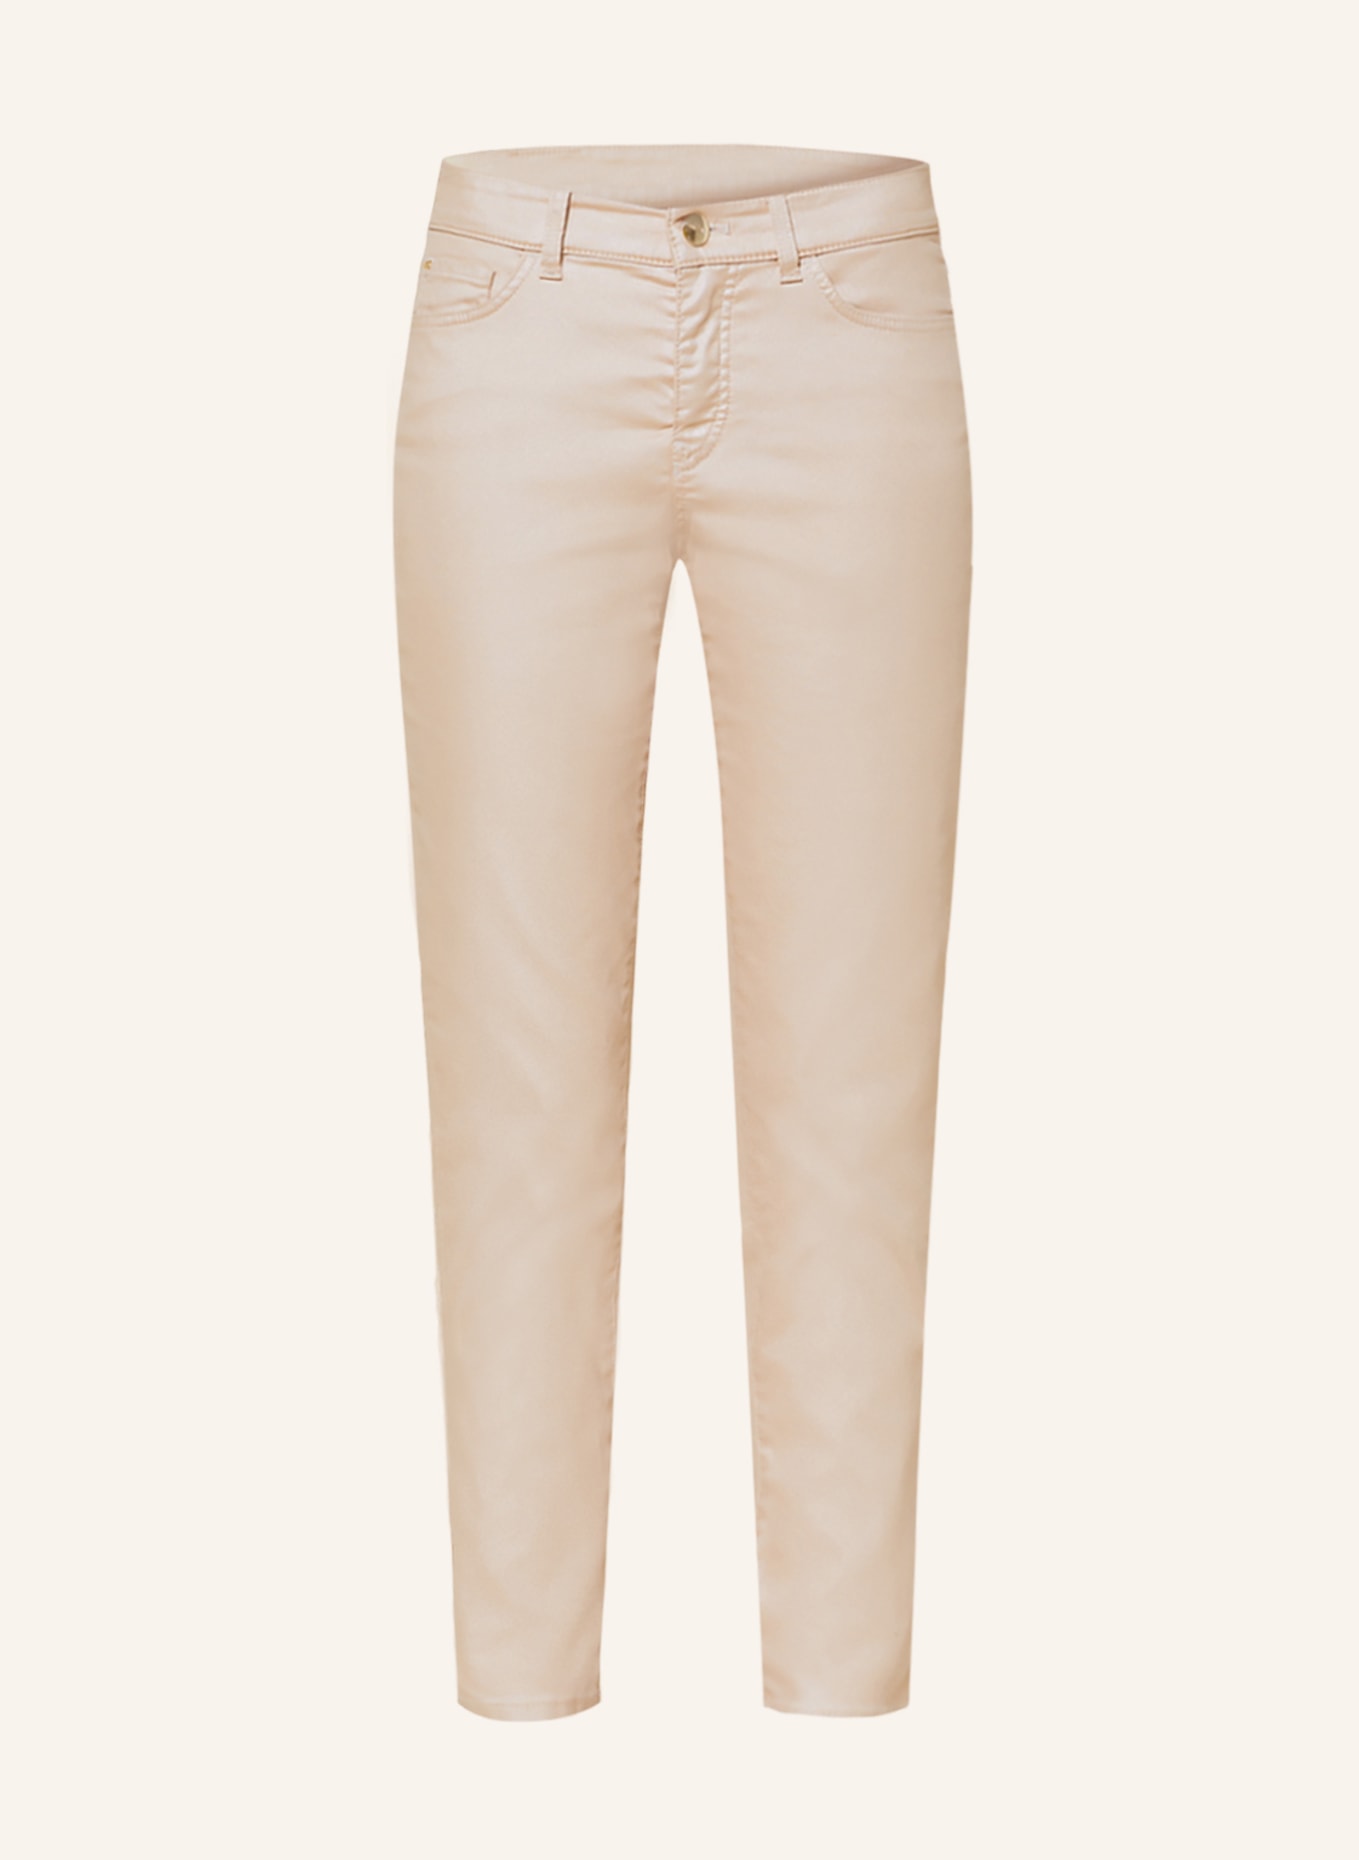 MARC CAIN Jeans, Farbe: 157 soft blossom (Bild 1)